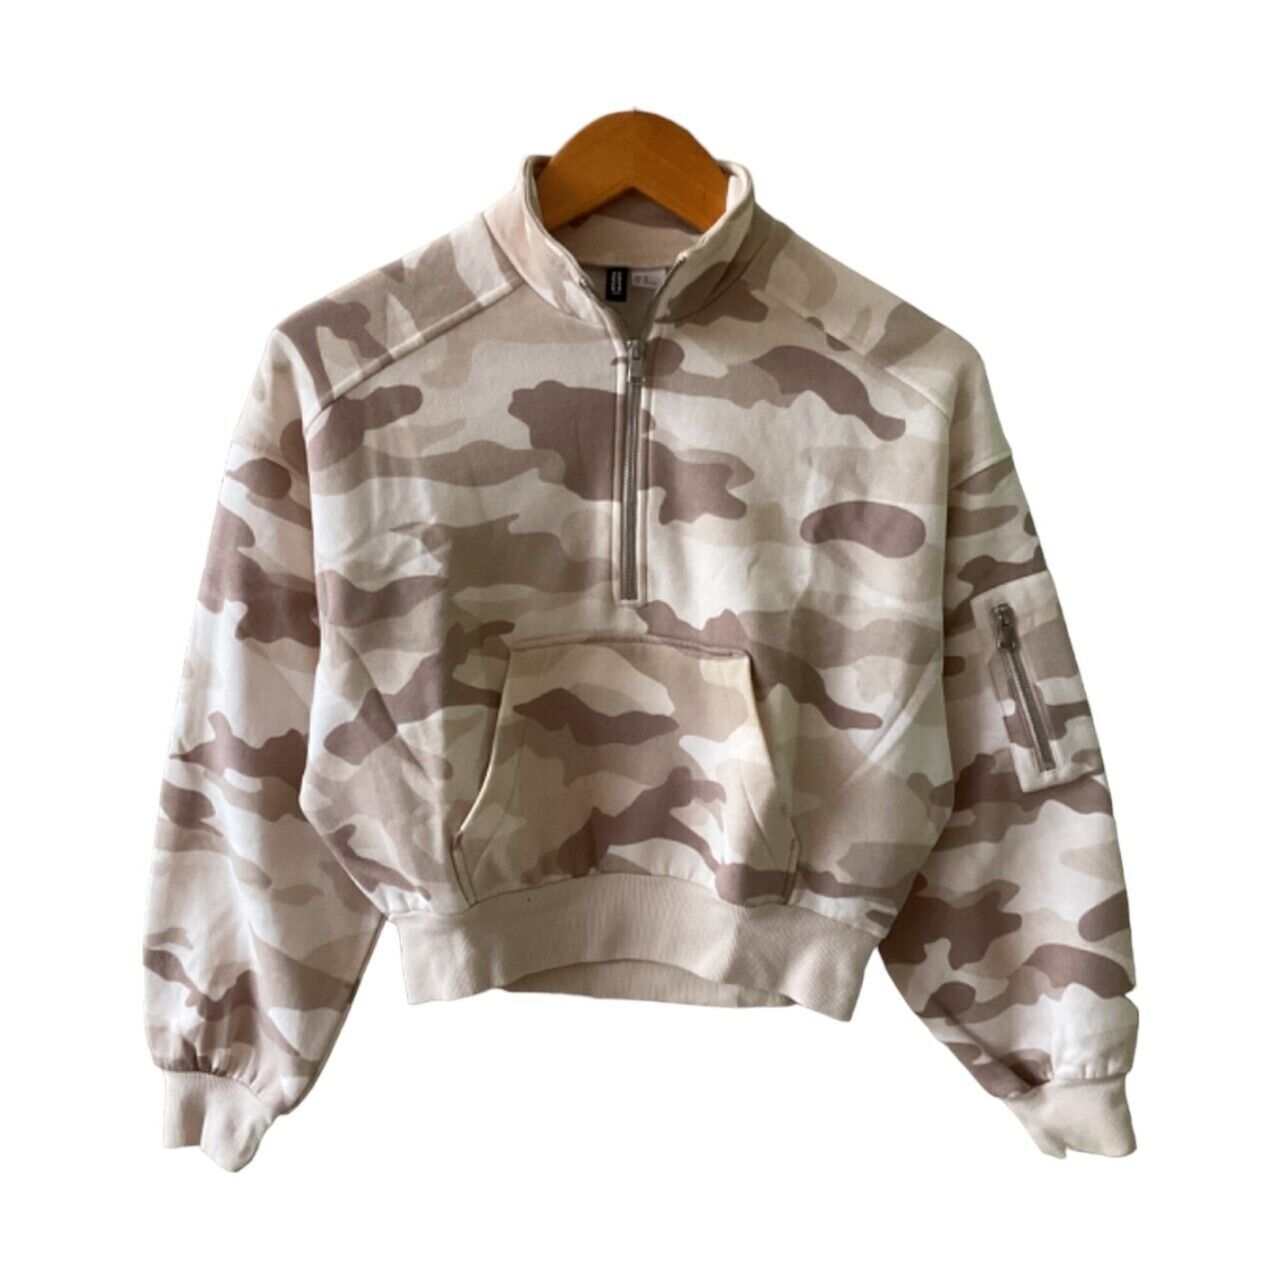 H&M Neutral Camo Crop Zipper Mock Neck Sweatshirt